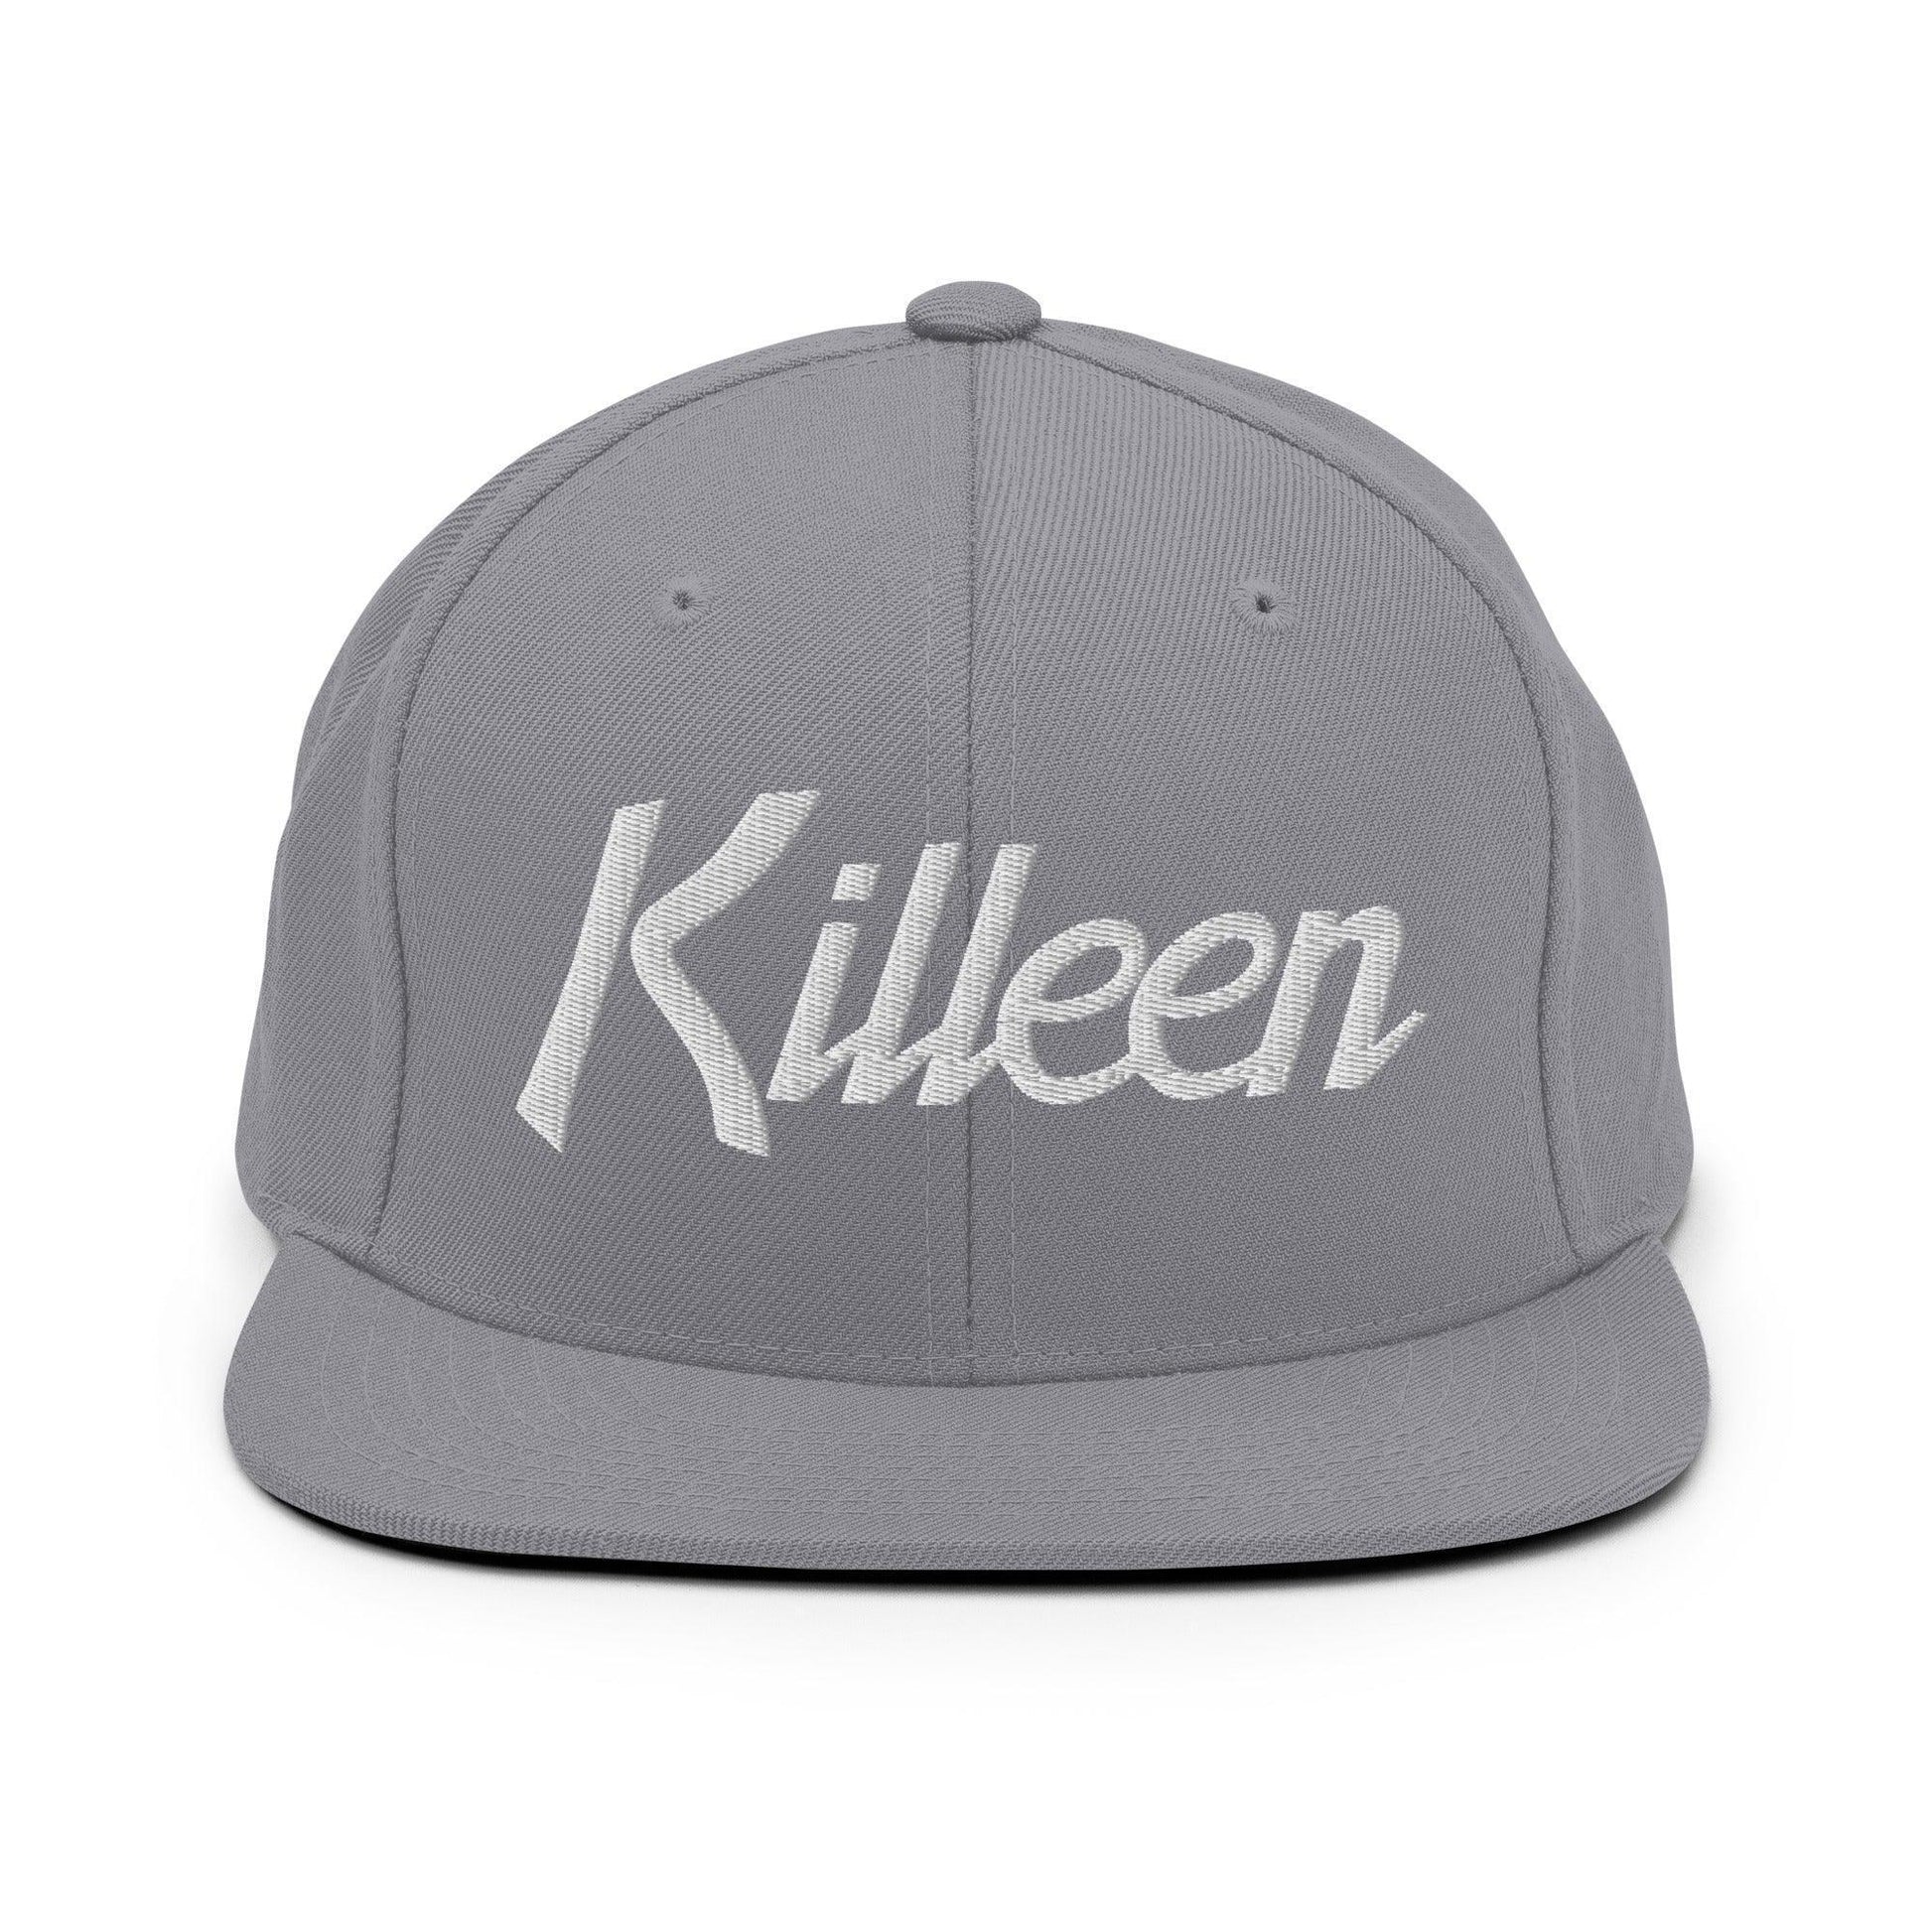 Killeen Script Snapback Hat Silver